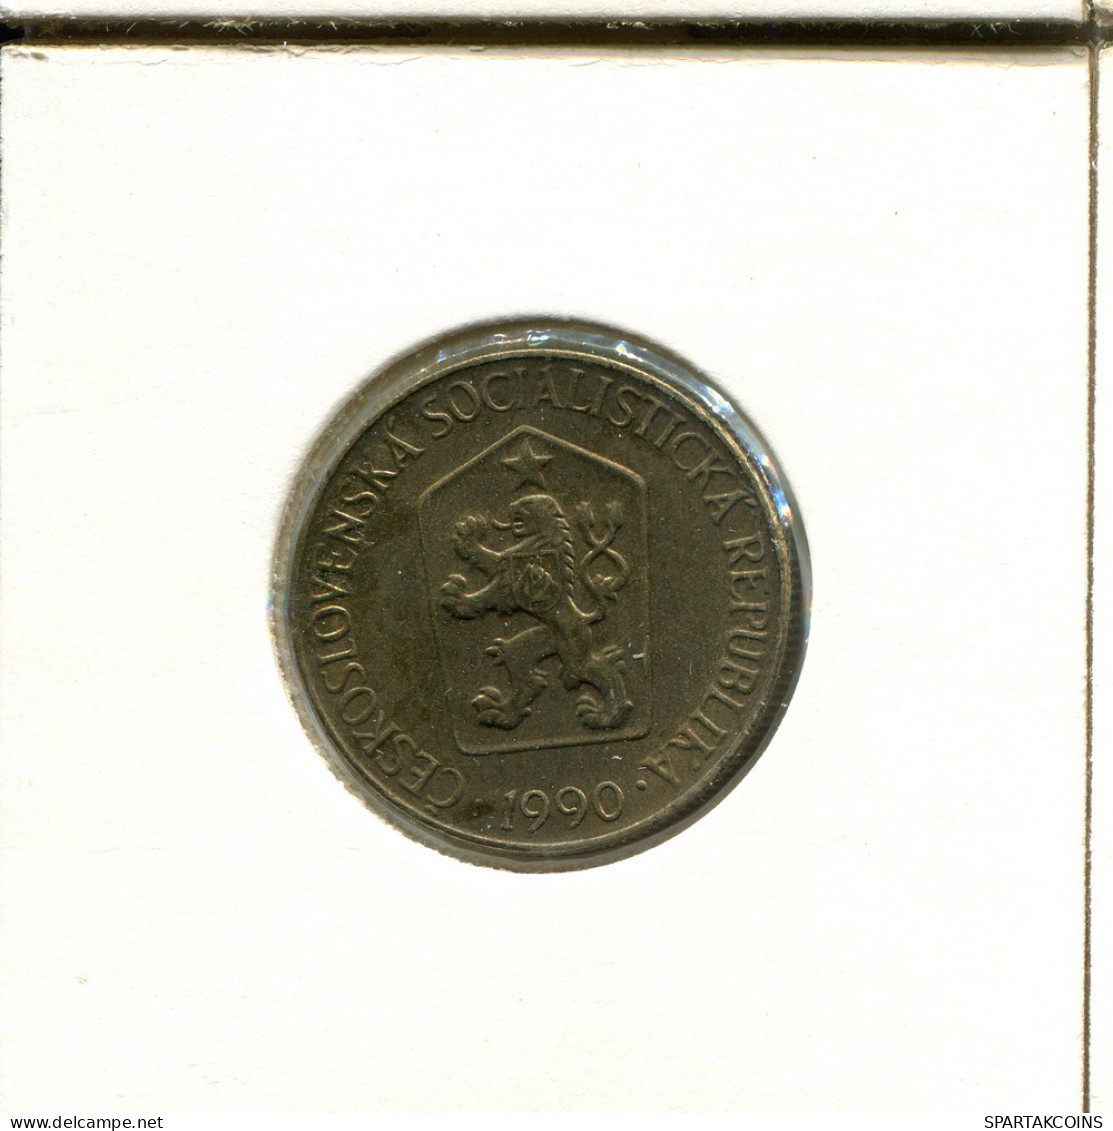 1 KORUNA 1990 CZECHOSLOVAKIA Coin #AS971.U.A - Czechoslovakia